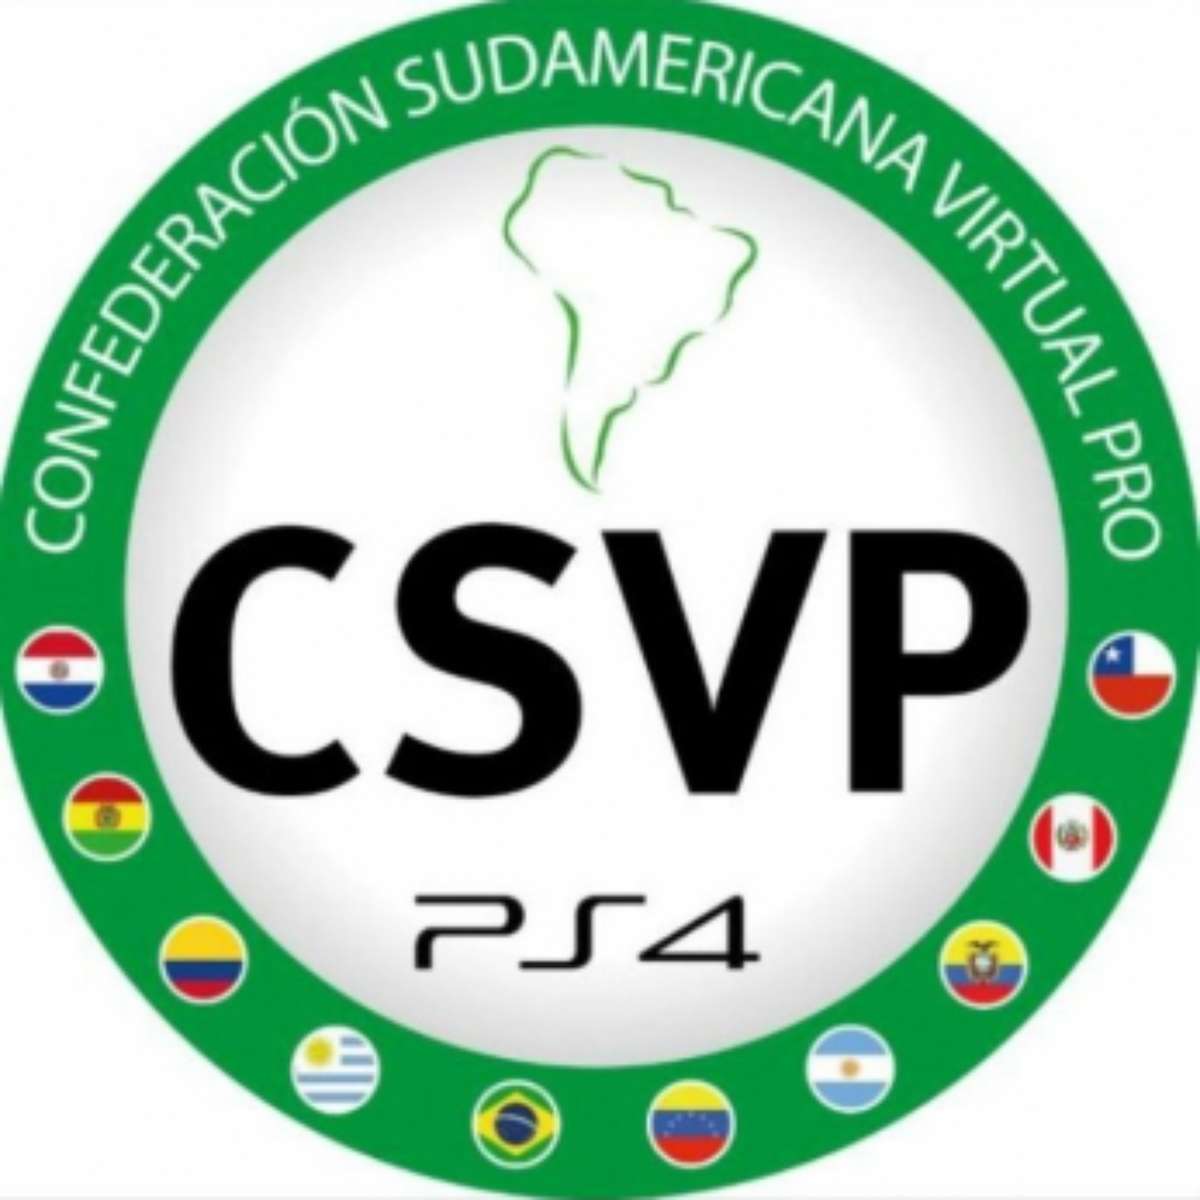 CSVP Brasil